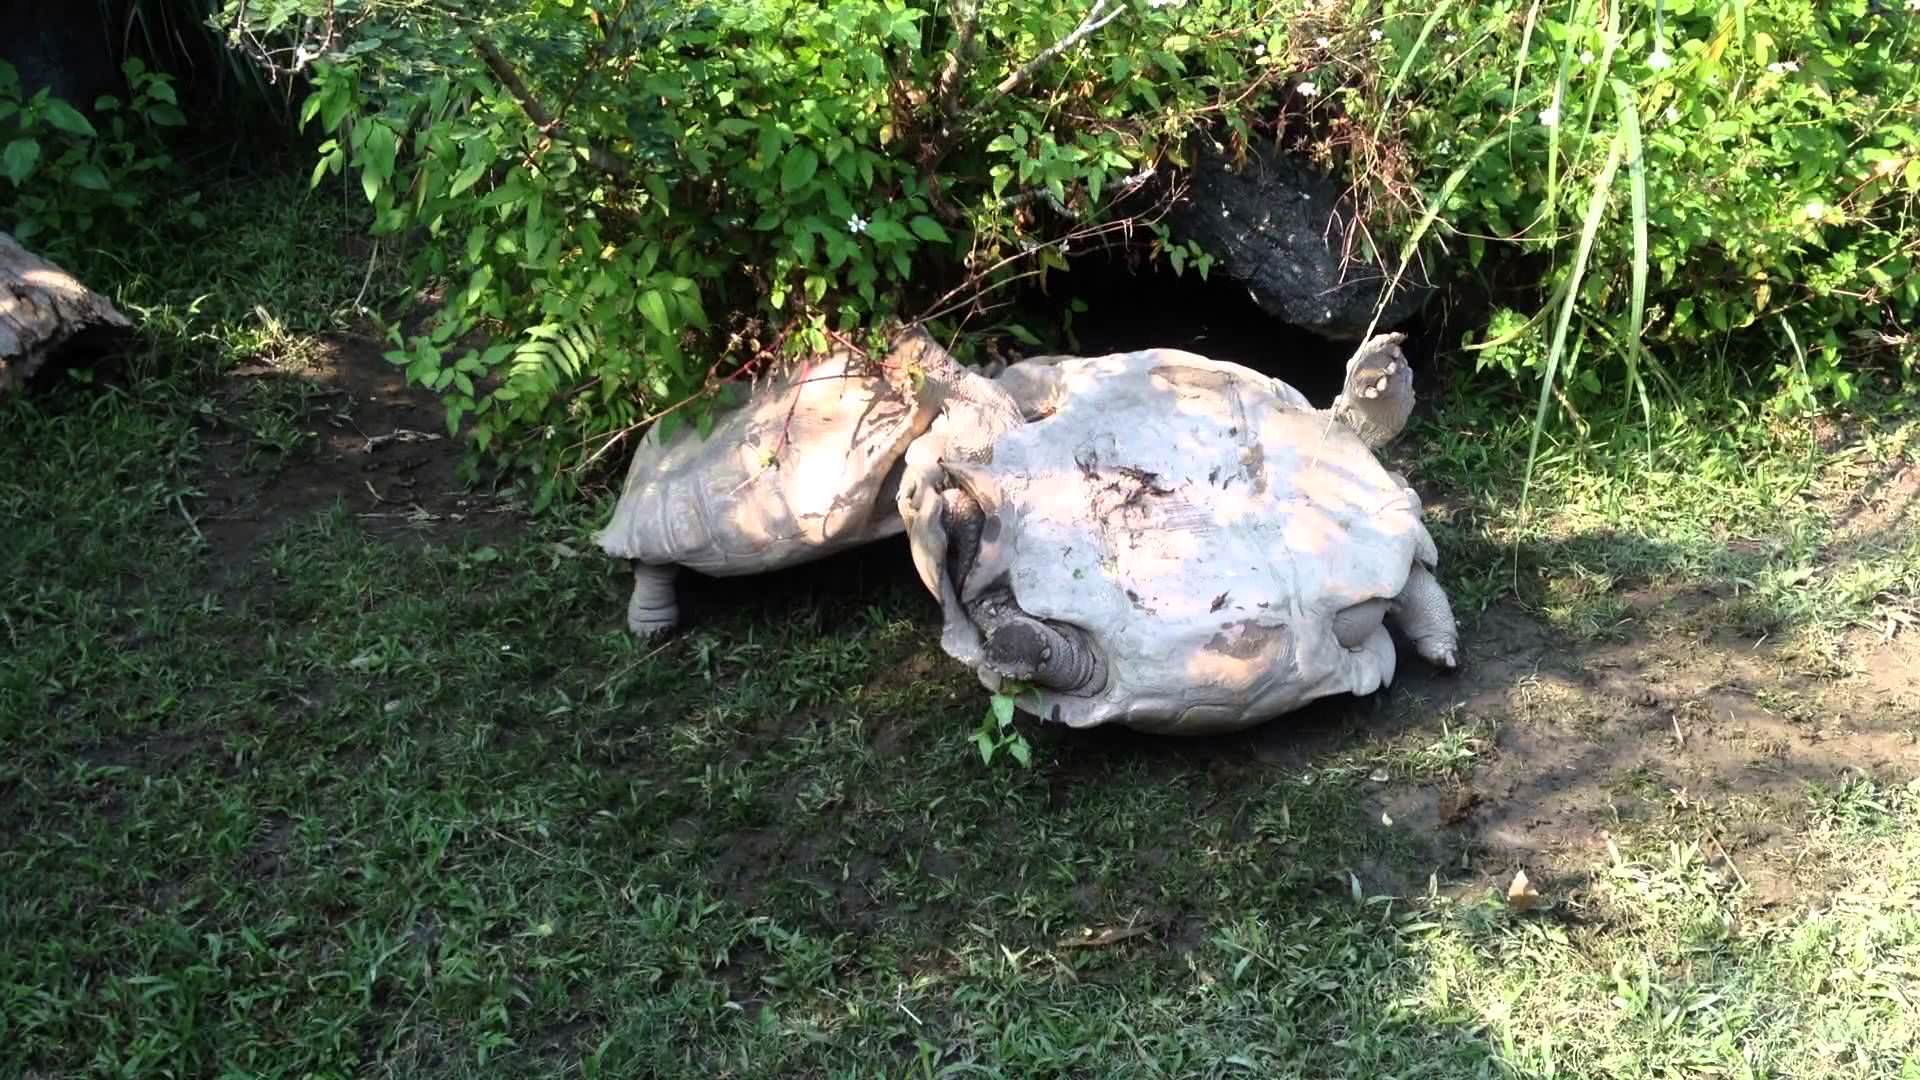 Tartaruga ajuda colega em apuros.